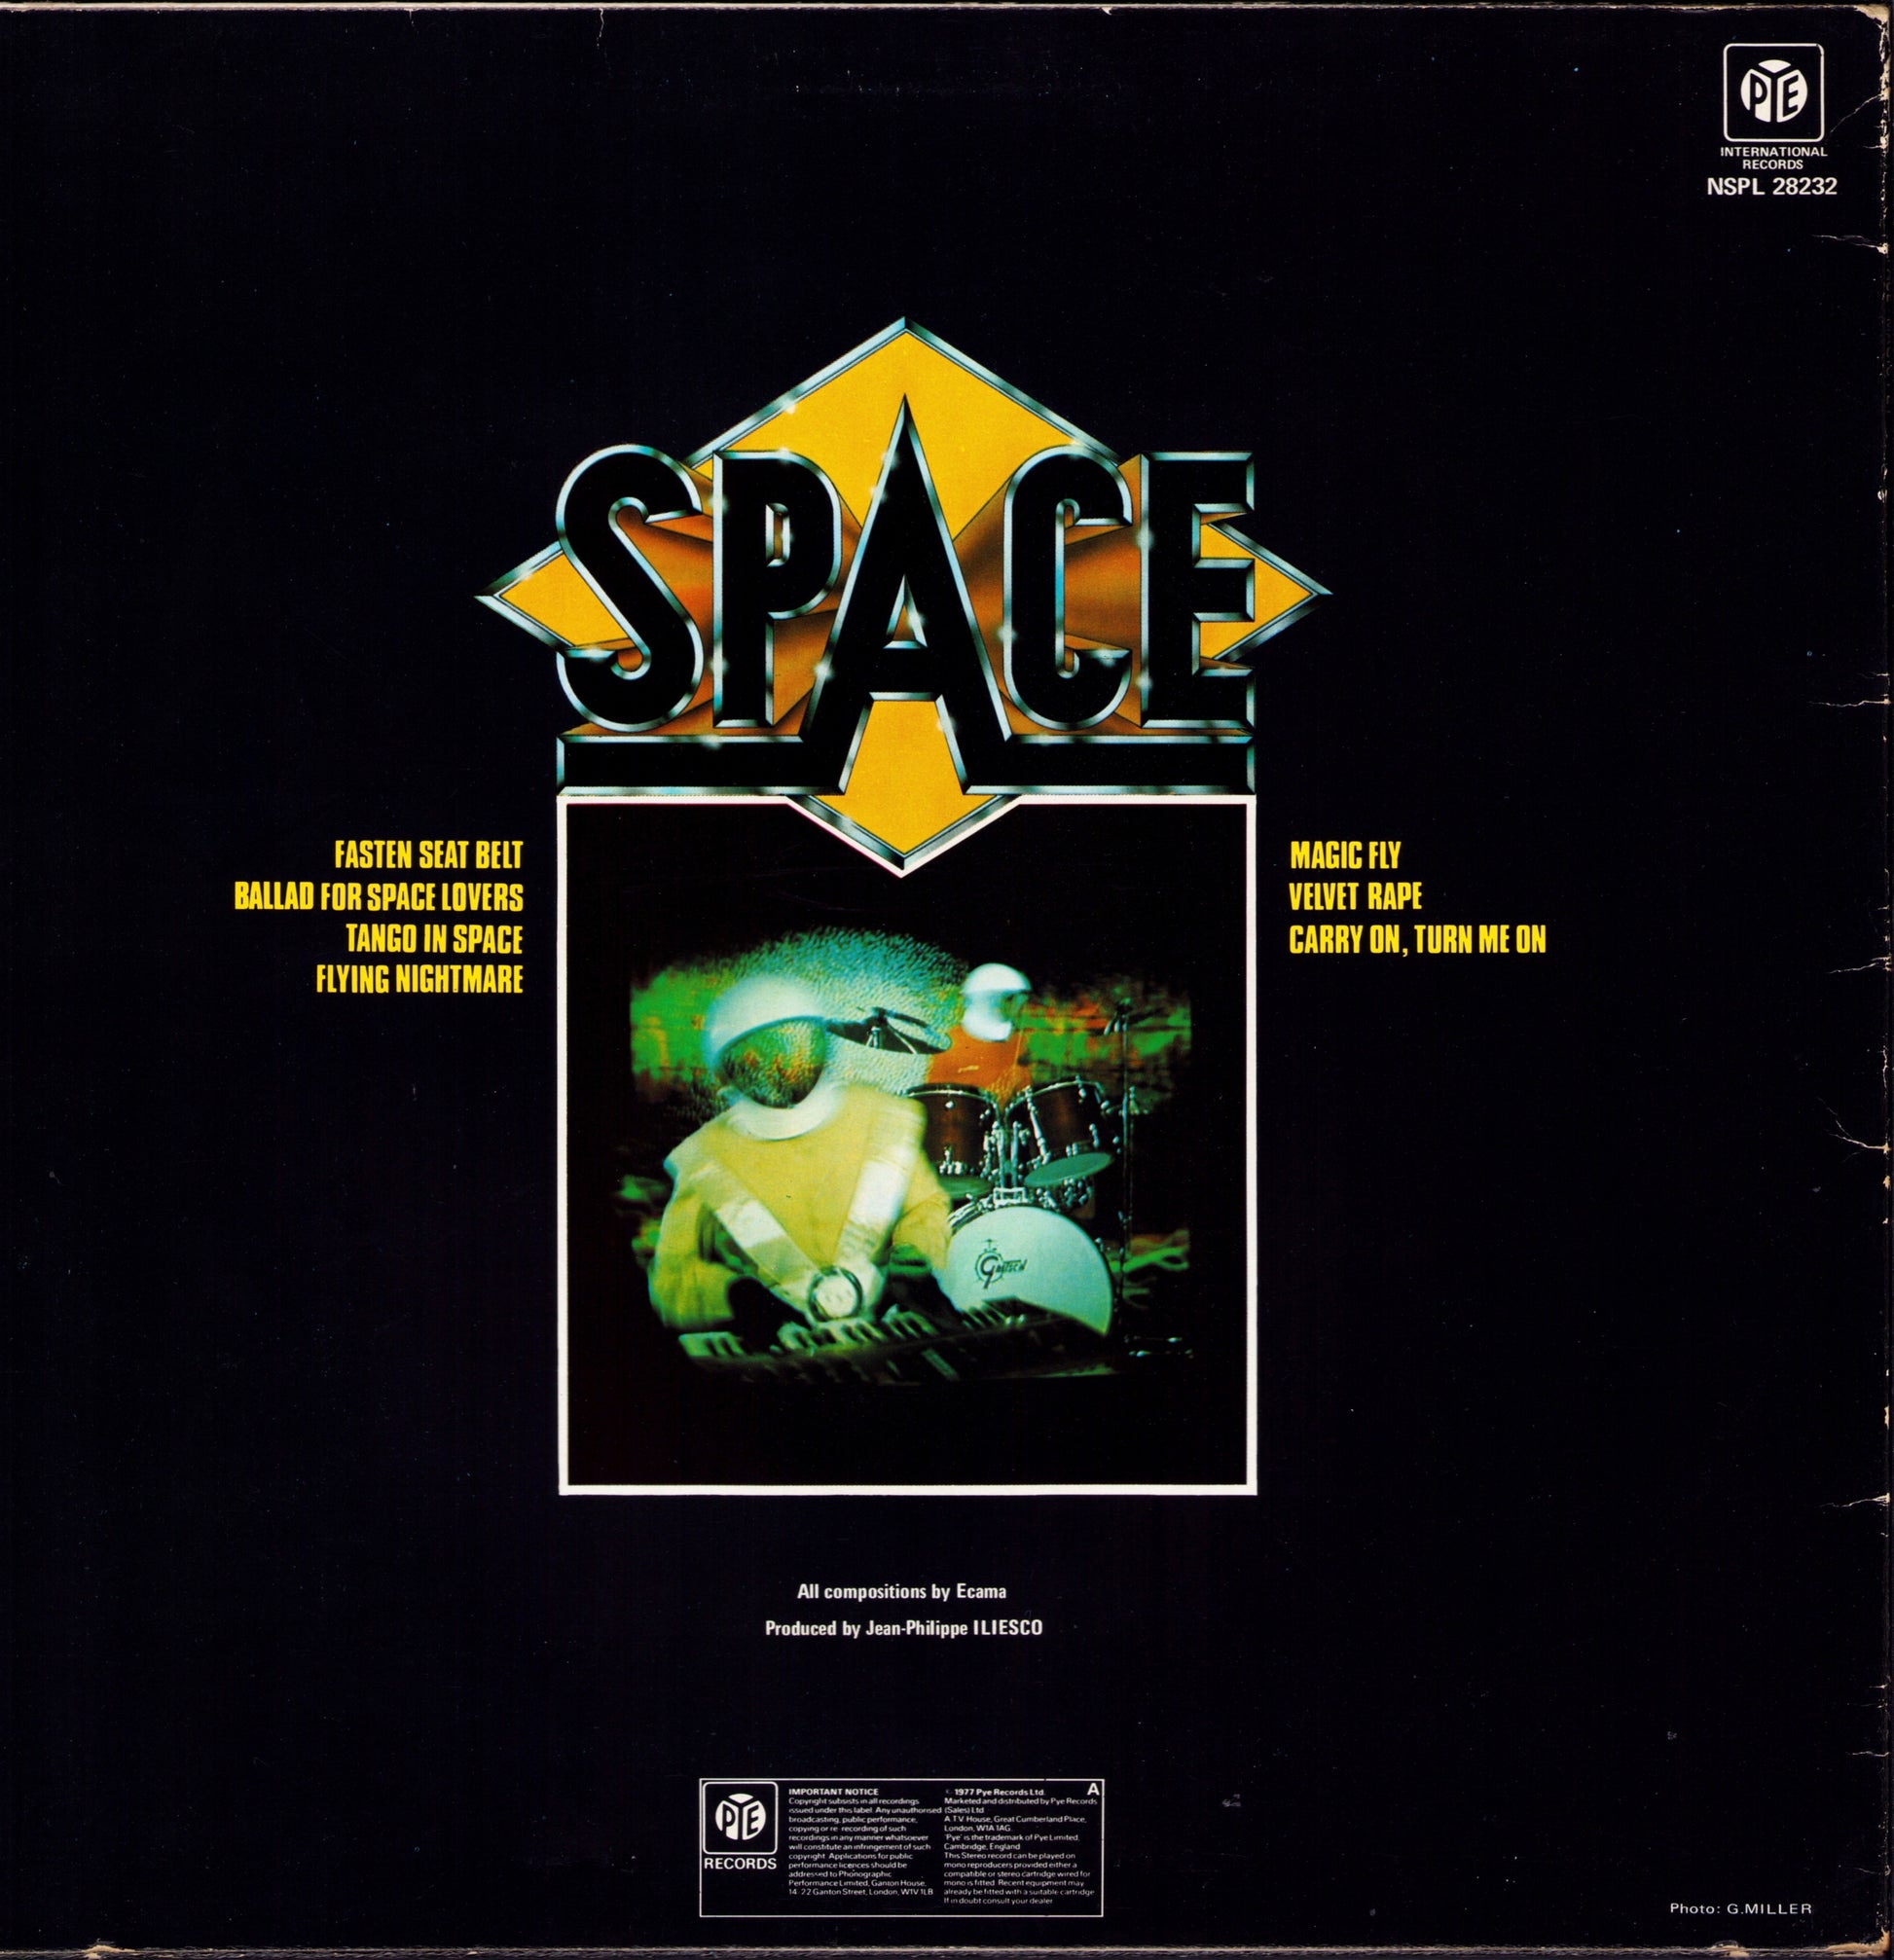 Space ‎- Magic Fly Purple Translucent Vinyl LP